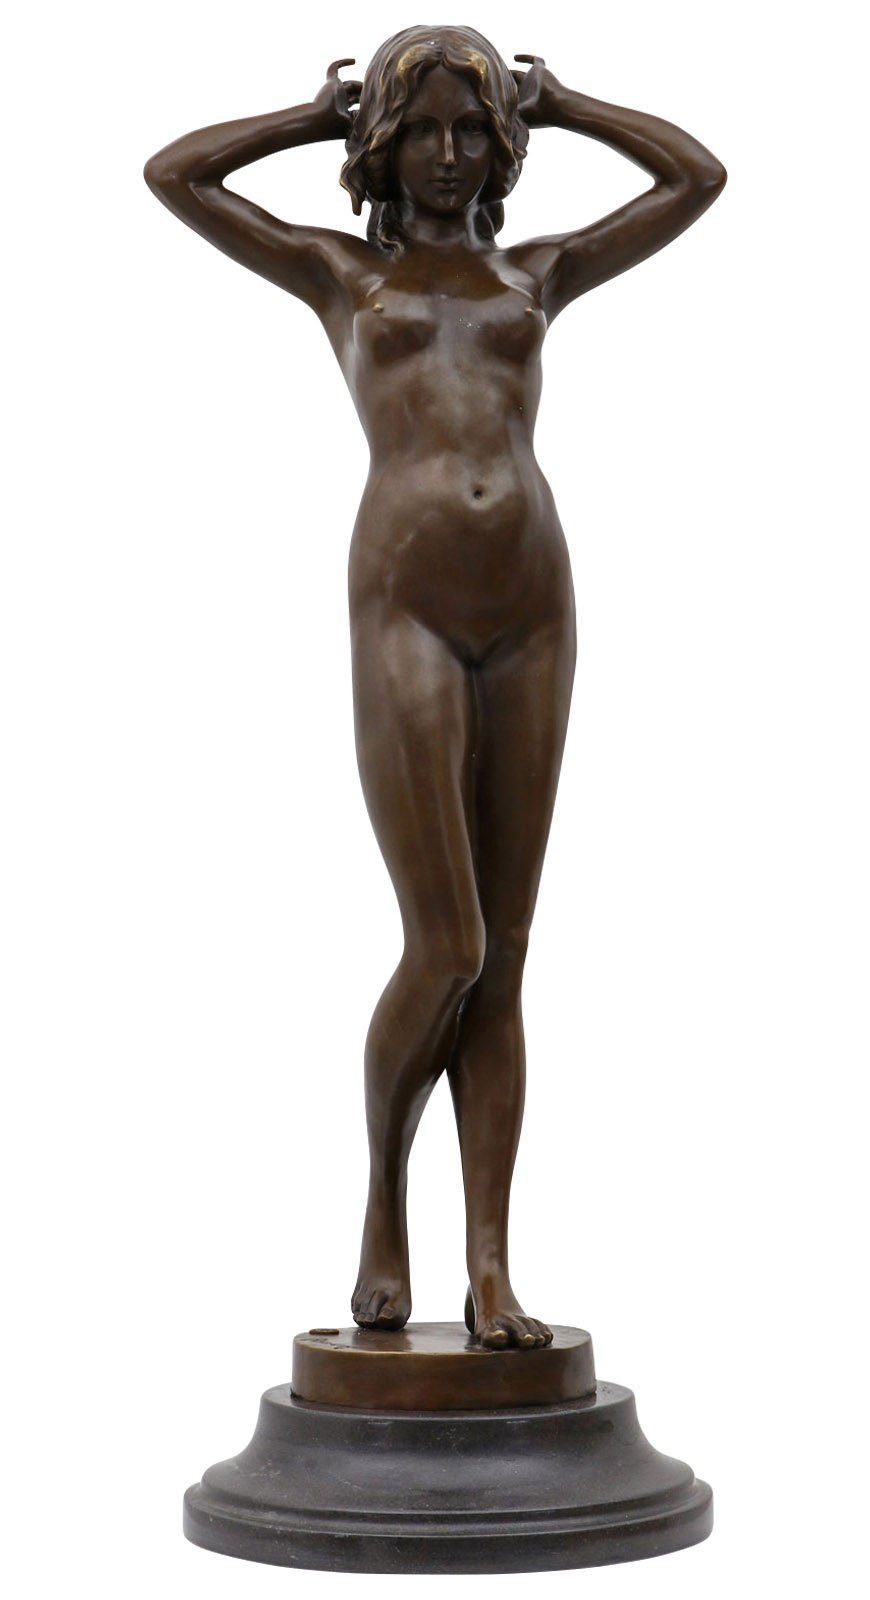 Antik-Stil Sta Erotik Aubaho Figur Frau Skulptur erotische Kunst Bronzeskulptur Bronze